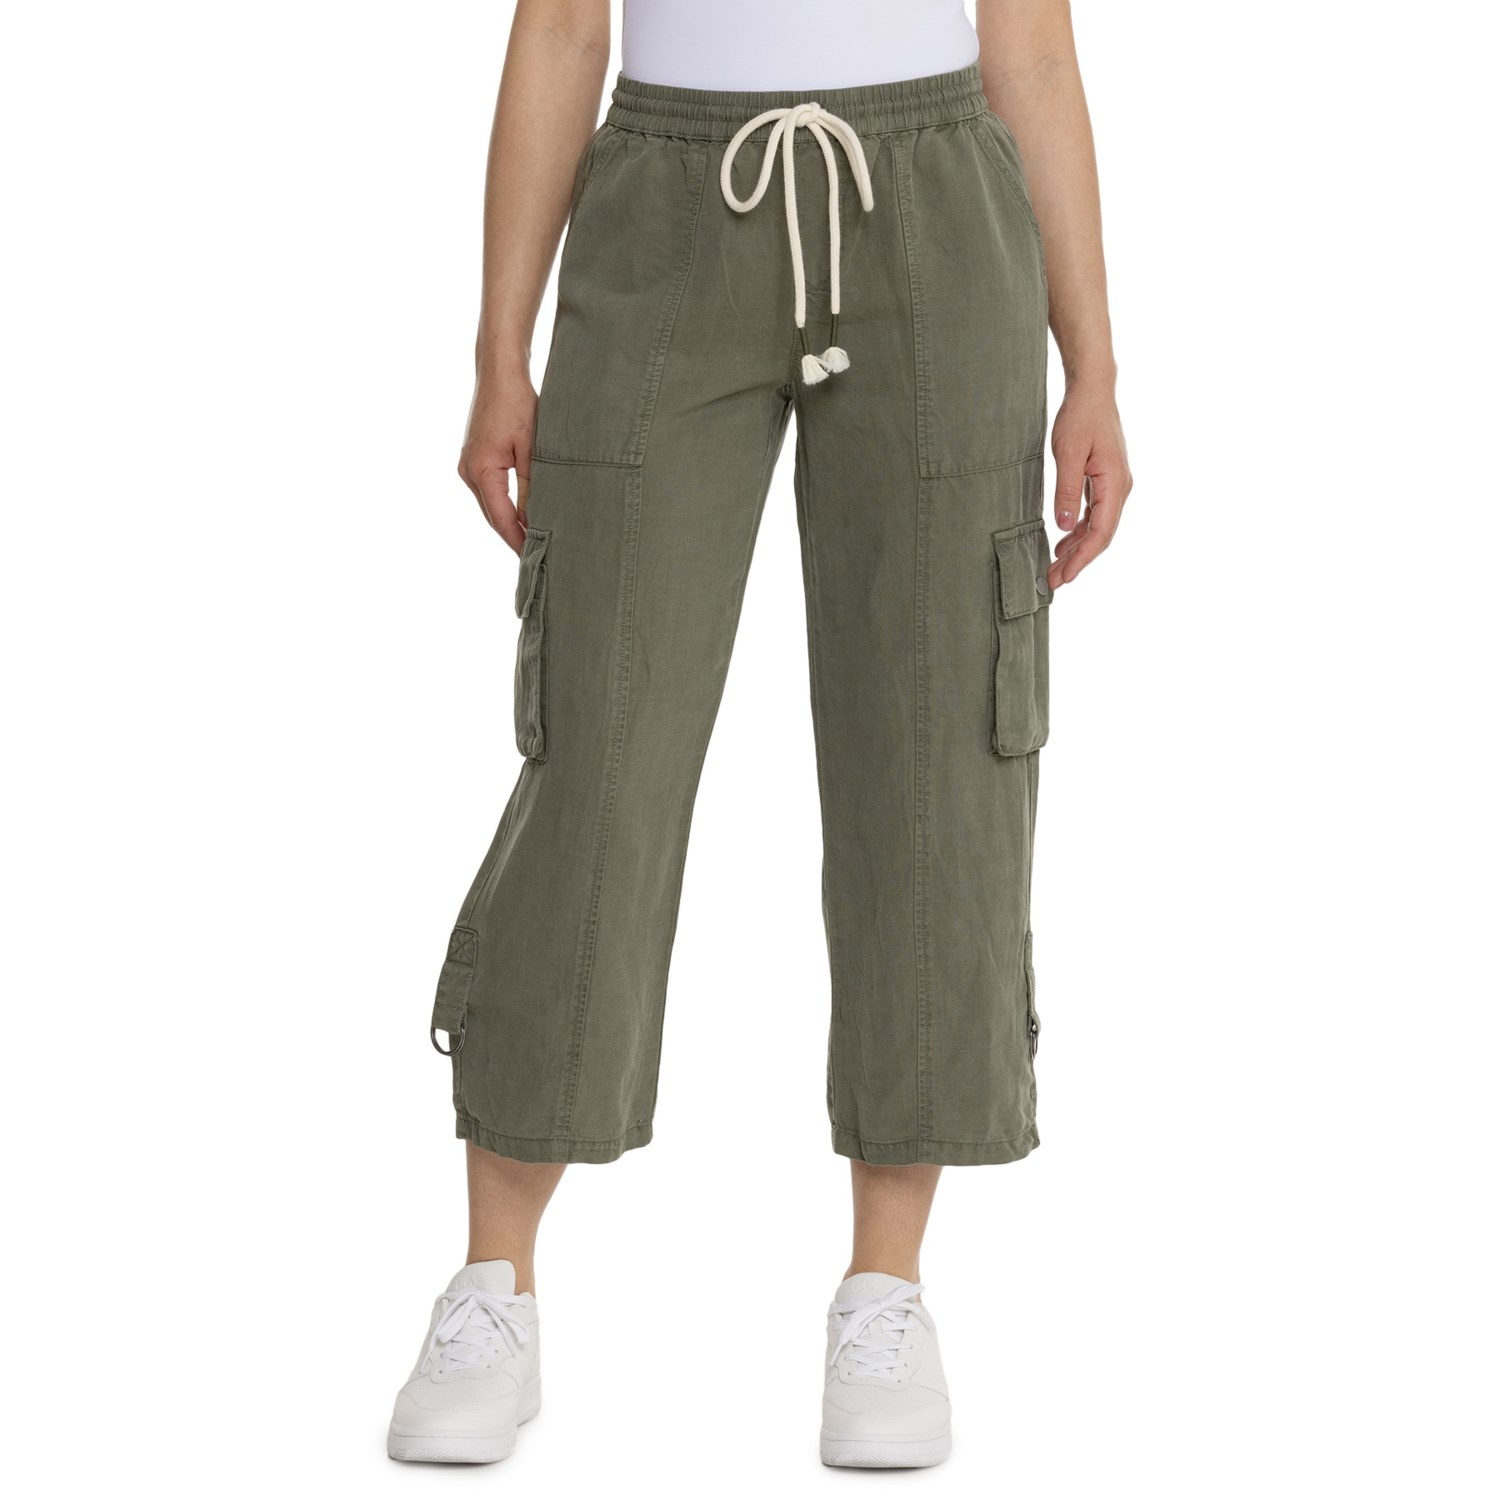 () jR[~[j[[N AWX^u t OX pc Nicole Miller New York Adjustable Full Length Pants Beetle